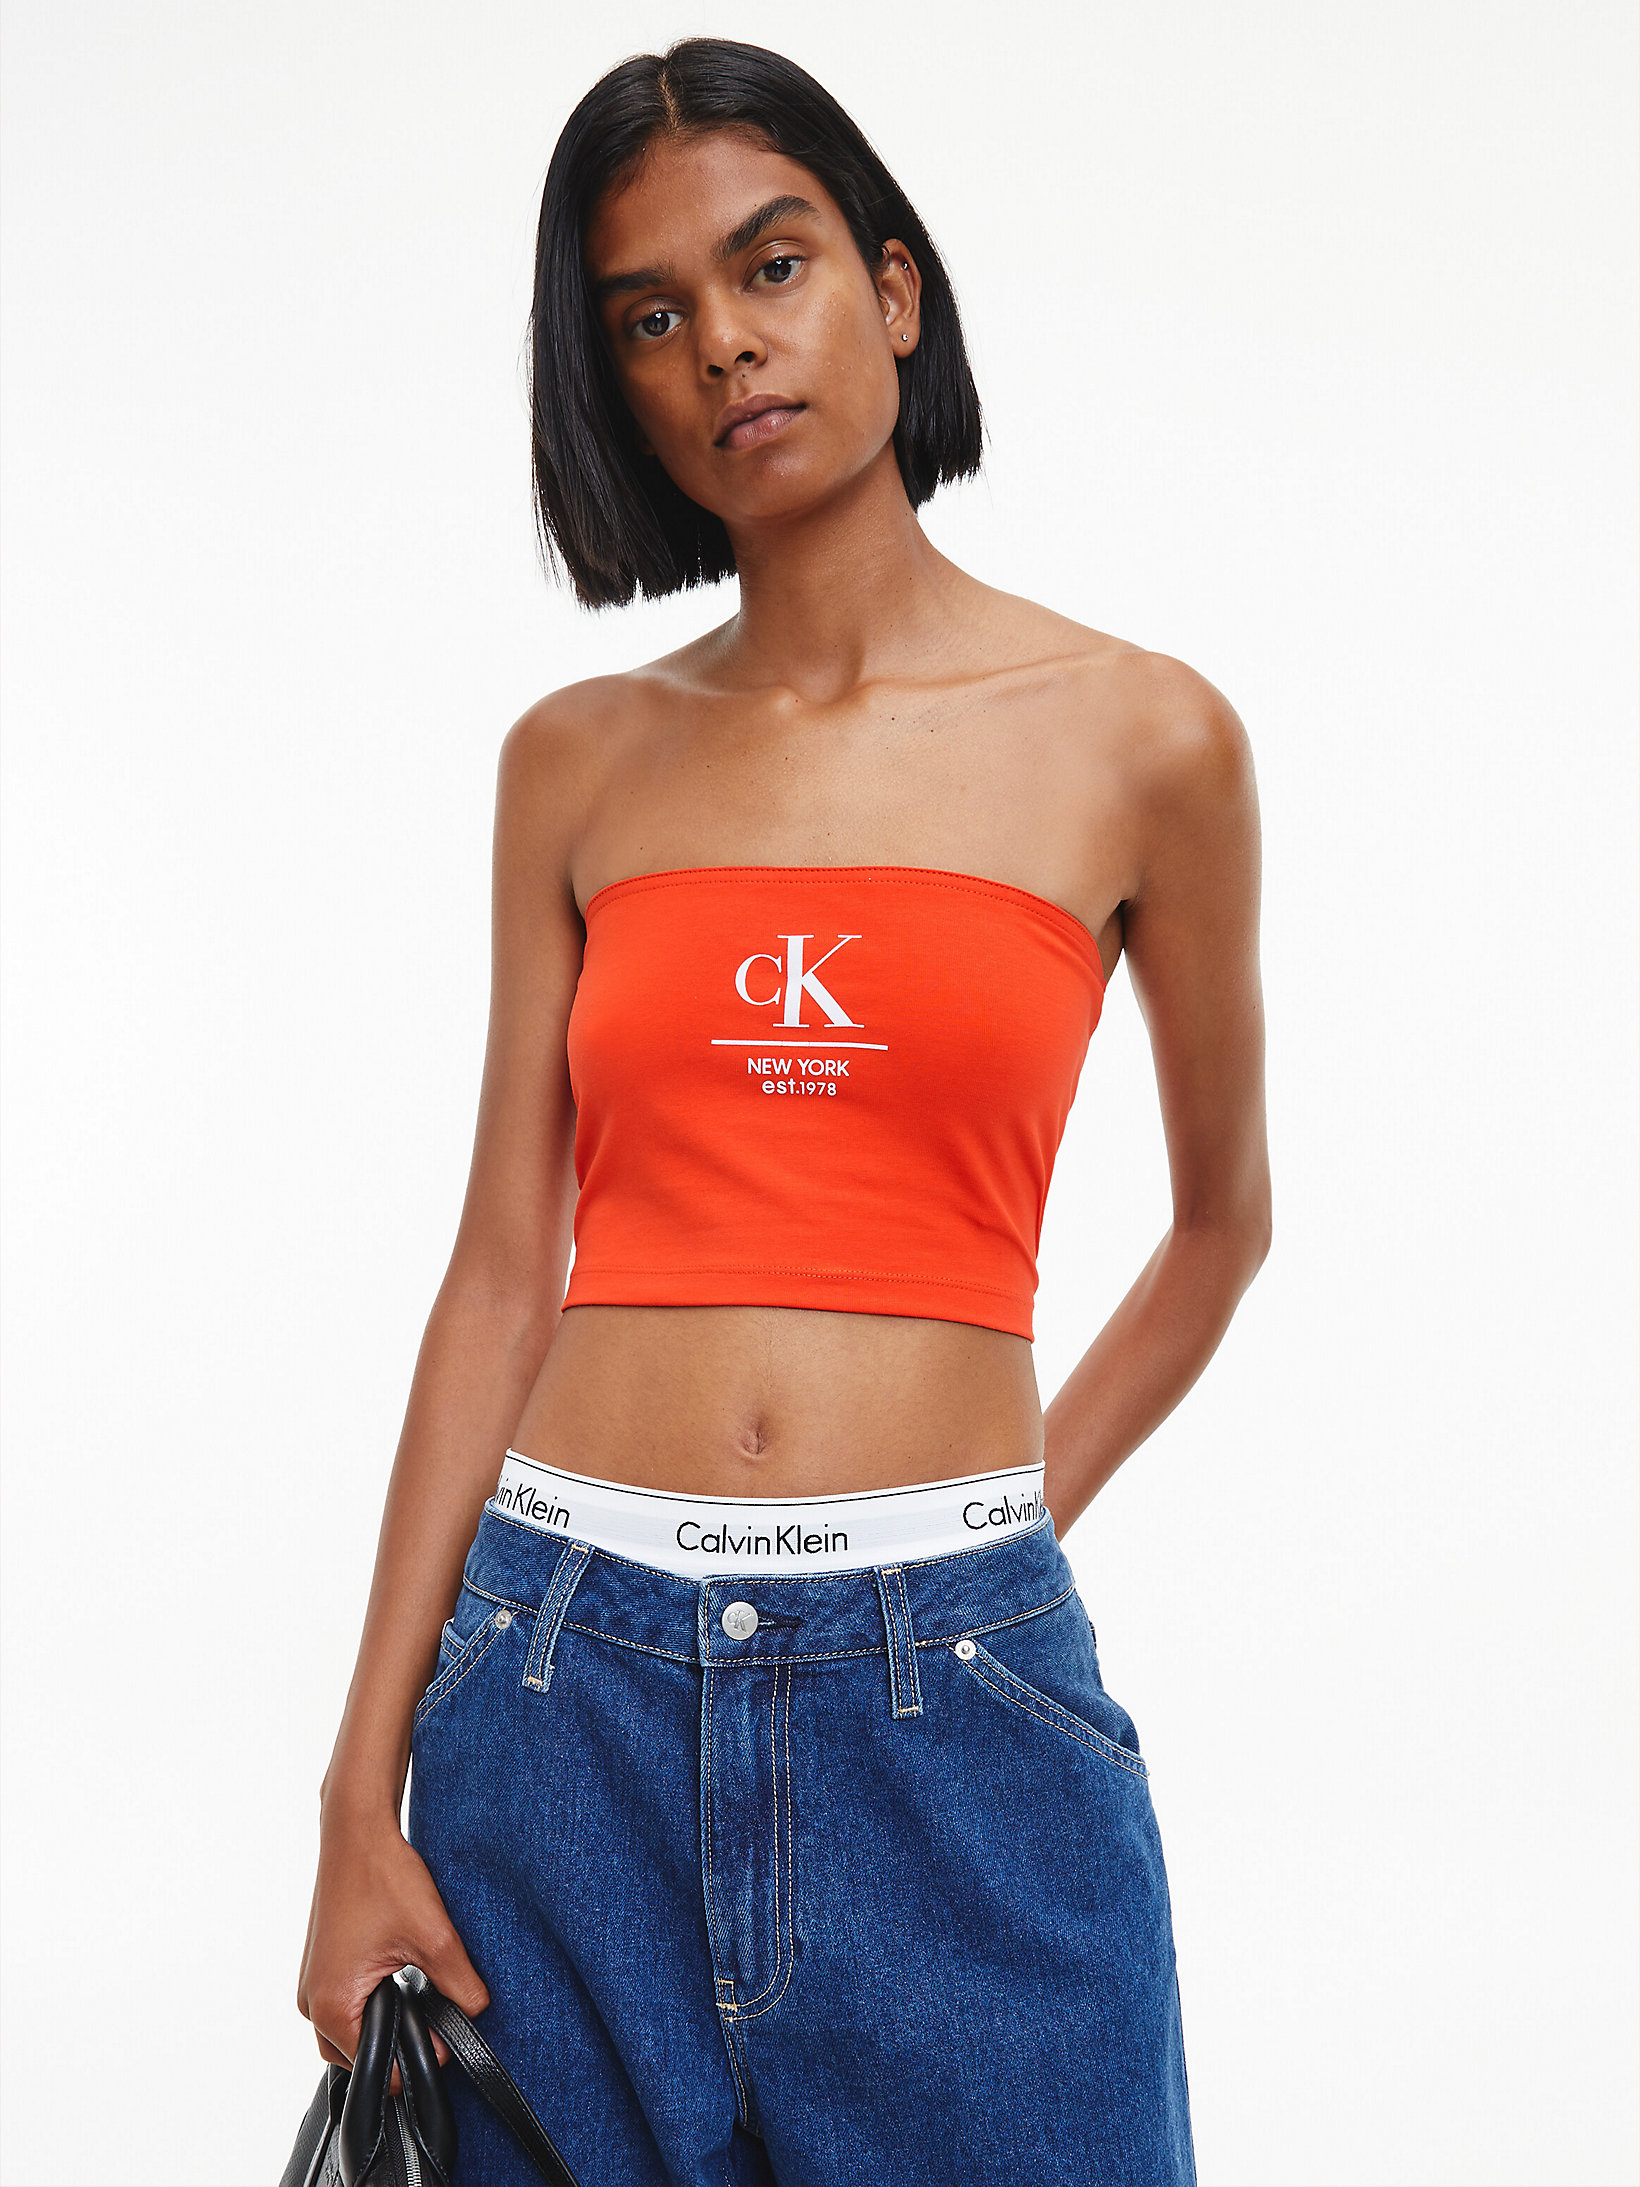 Coral Orange > Топ-бандо с логотипом > undefined Женщины - Calvin Klein